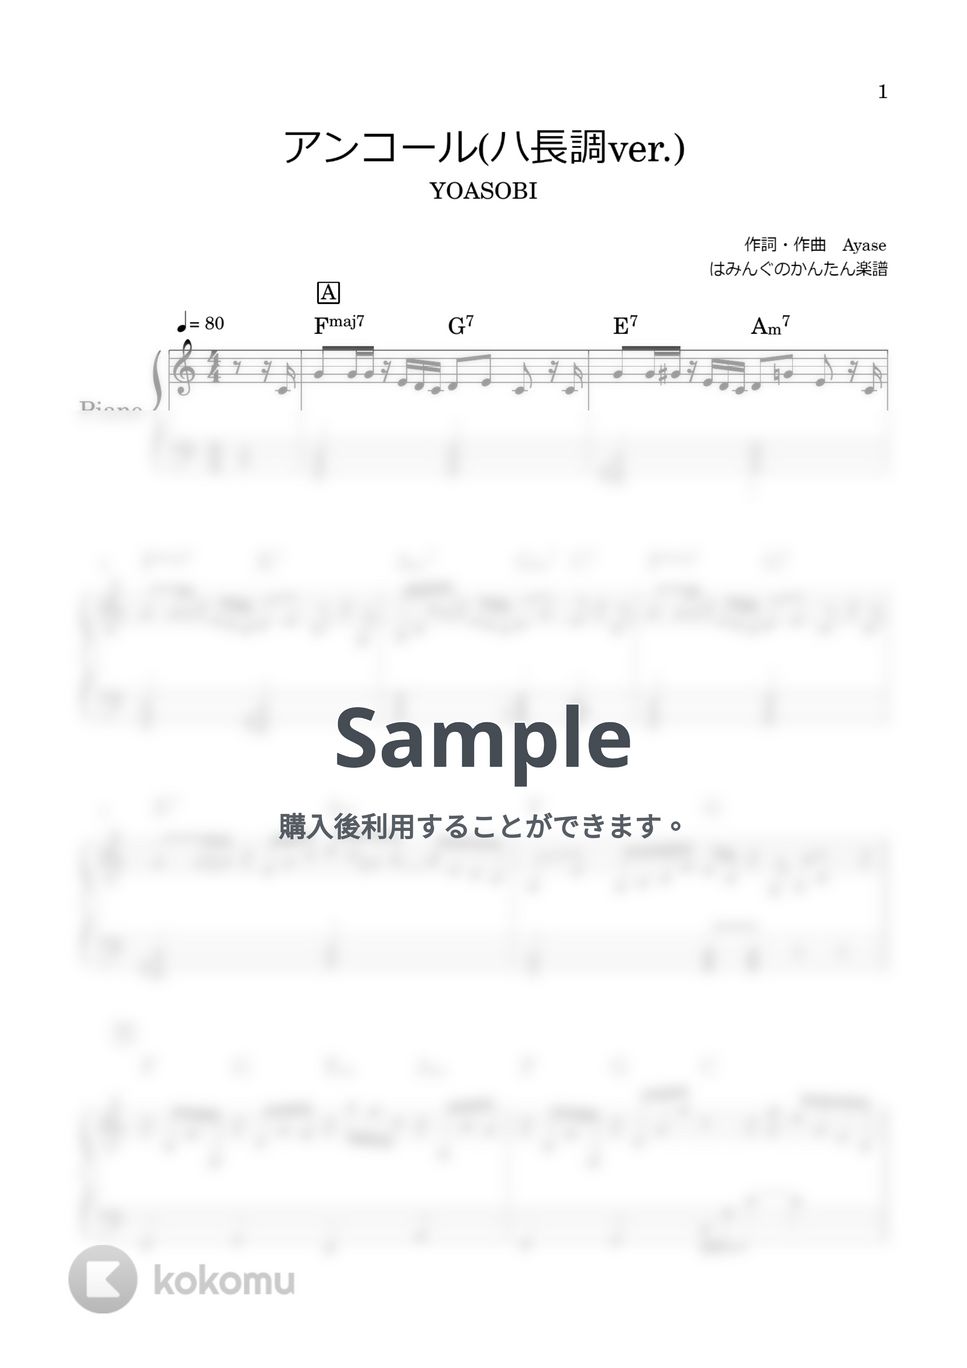 YOASOBI - アンコール (ハ長調) by はみんぐのかんたん楽譜